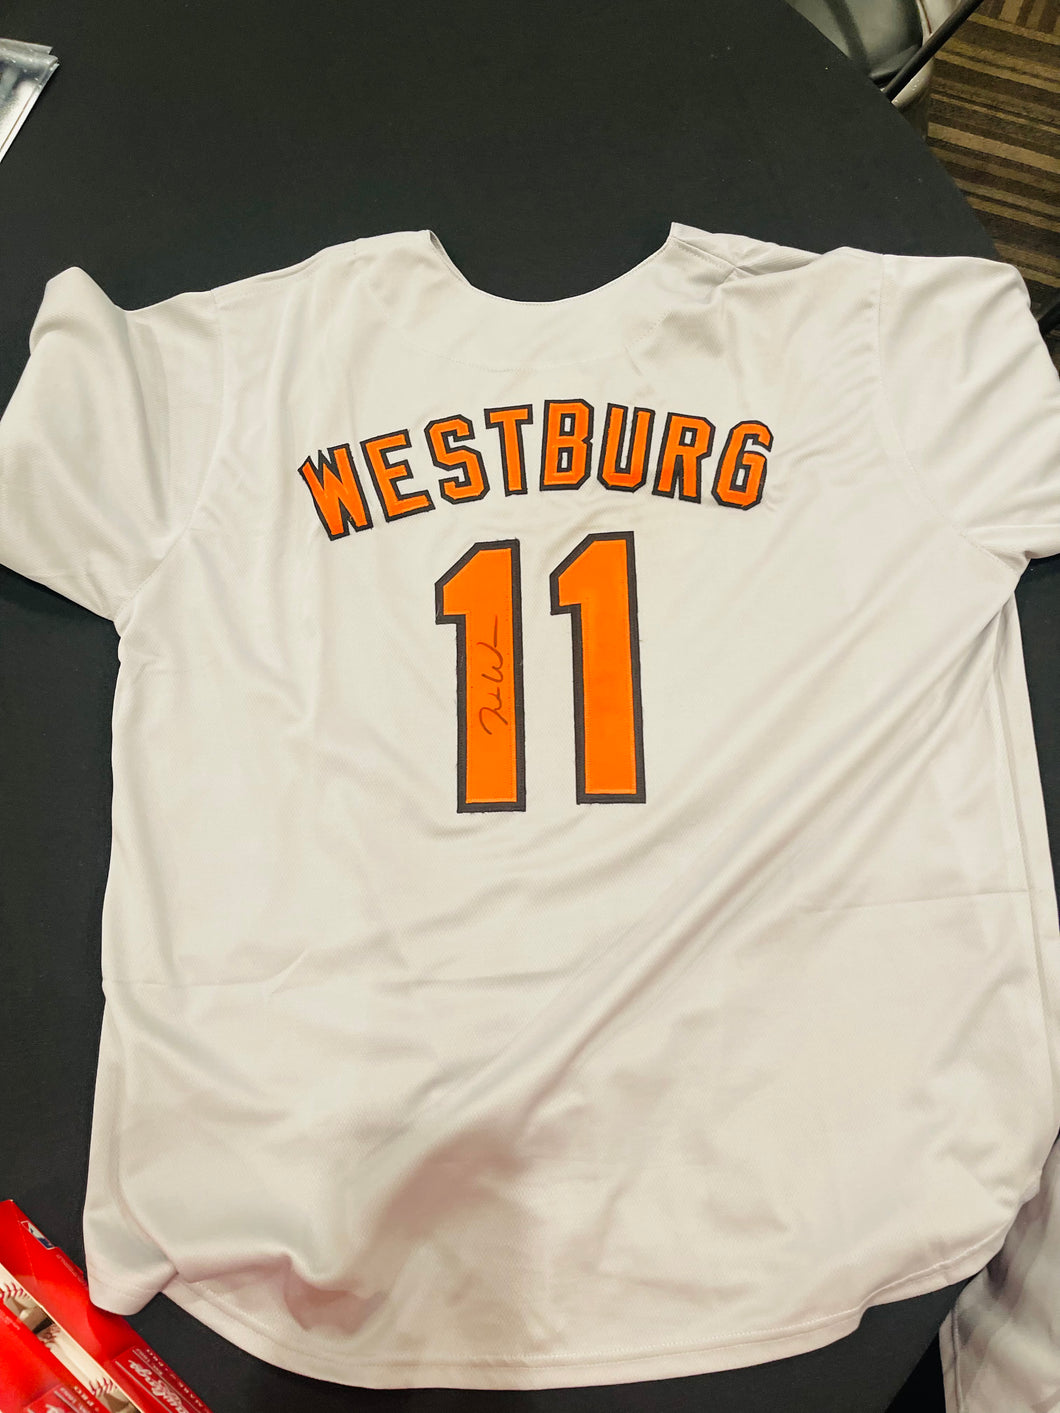 Jordan Westburg signed custom jersey